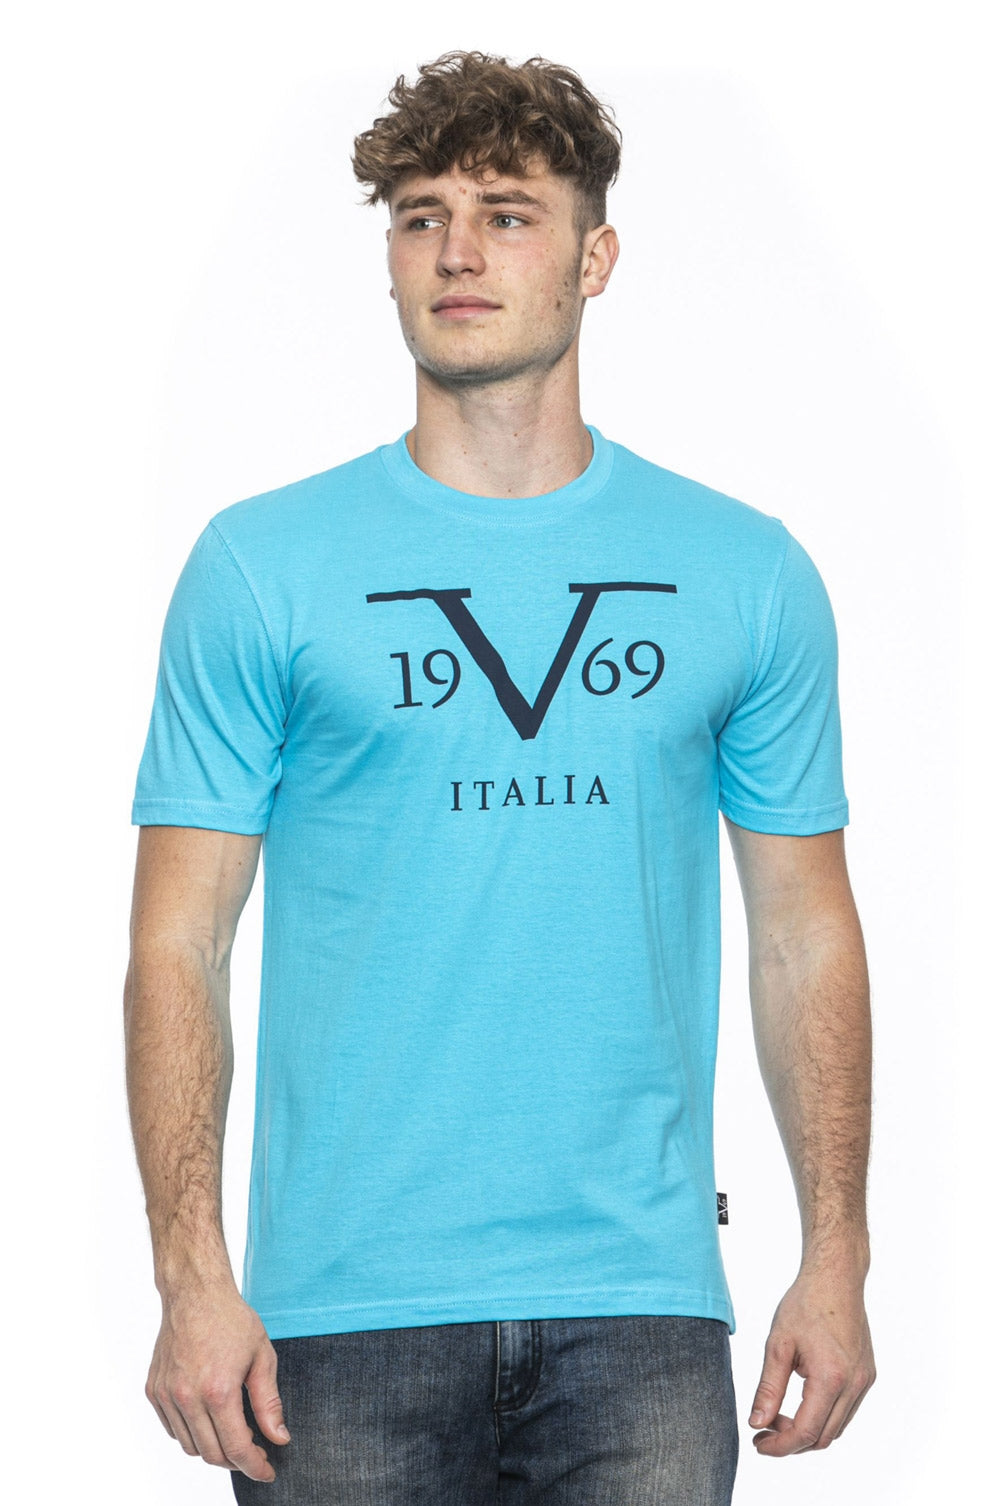 19V69 Italia Mens T-Shirt Light Blue RAYAN TURQUOISE